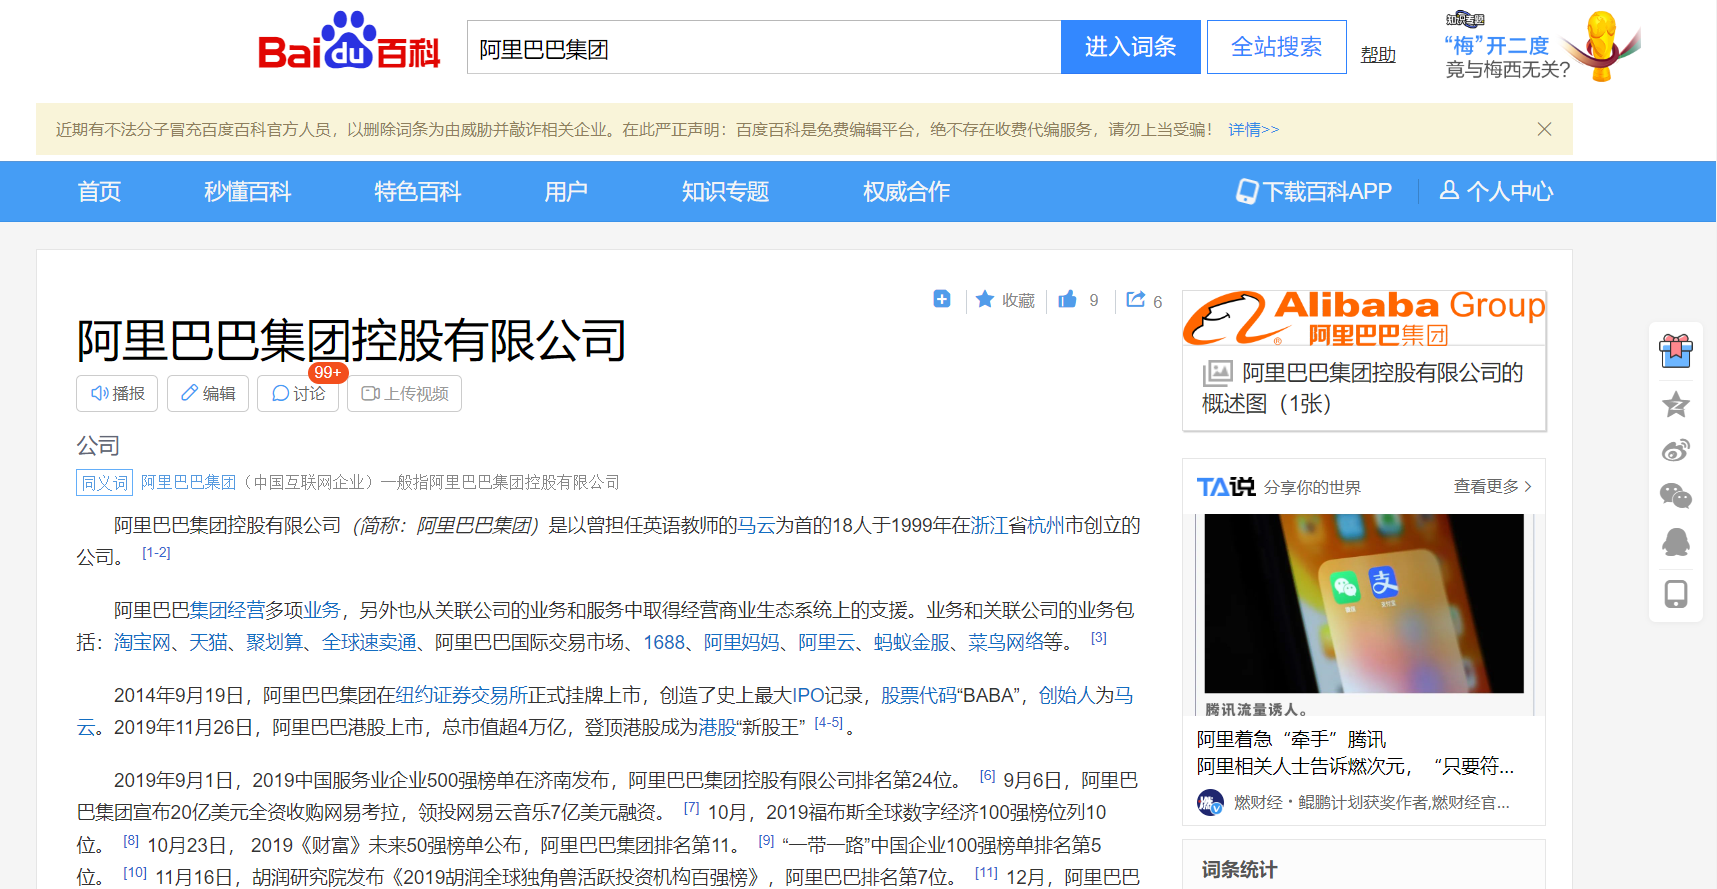 Baidu Baike - китайский аналог Википедии.